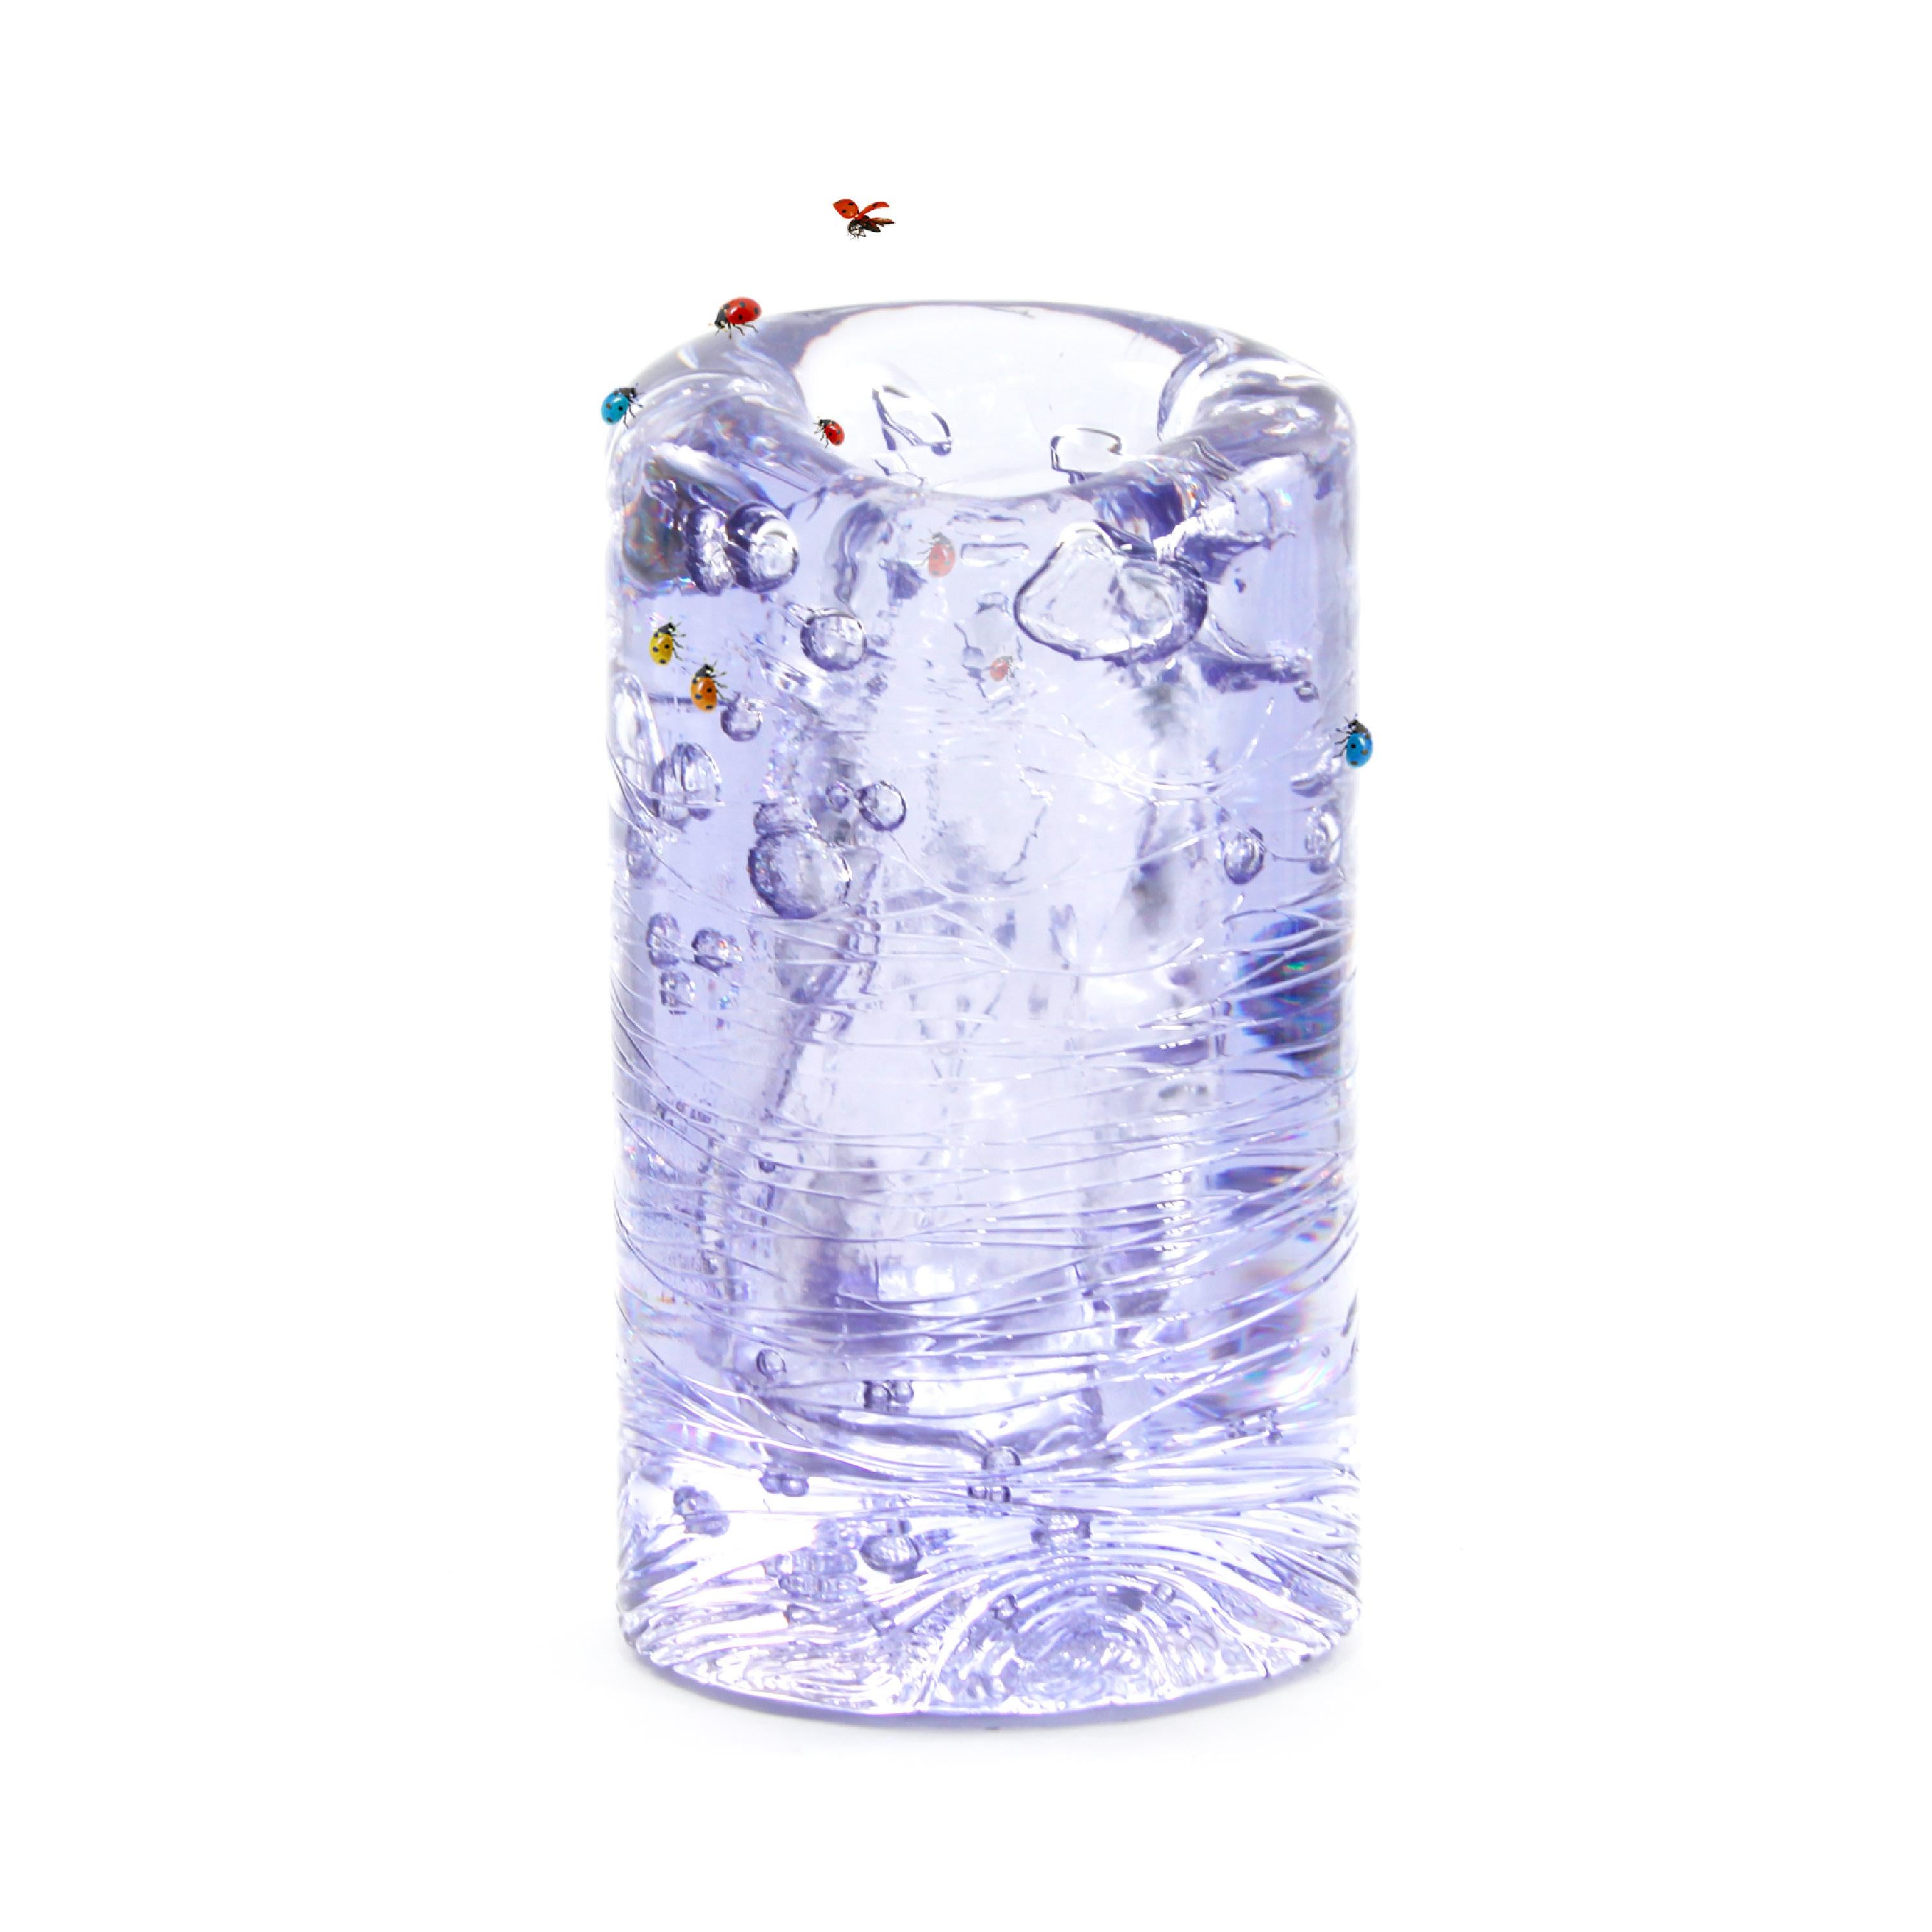 Jungle Contemporary Vase, Small Bicolor Transparent and Blue by Jacopo Foggini For Sale 1